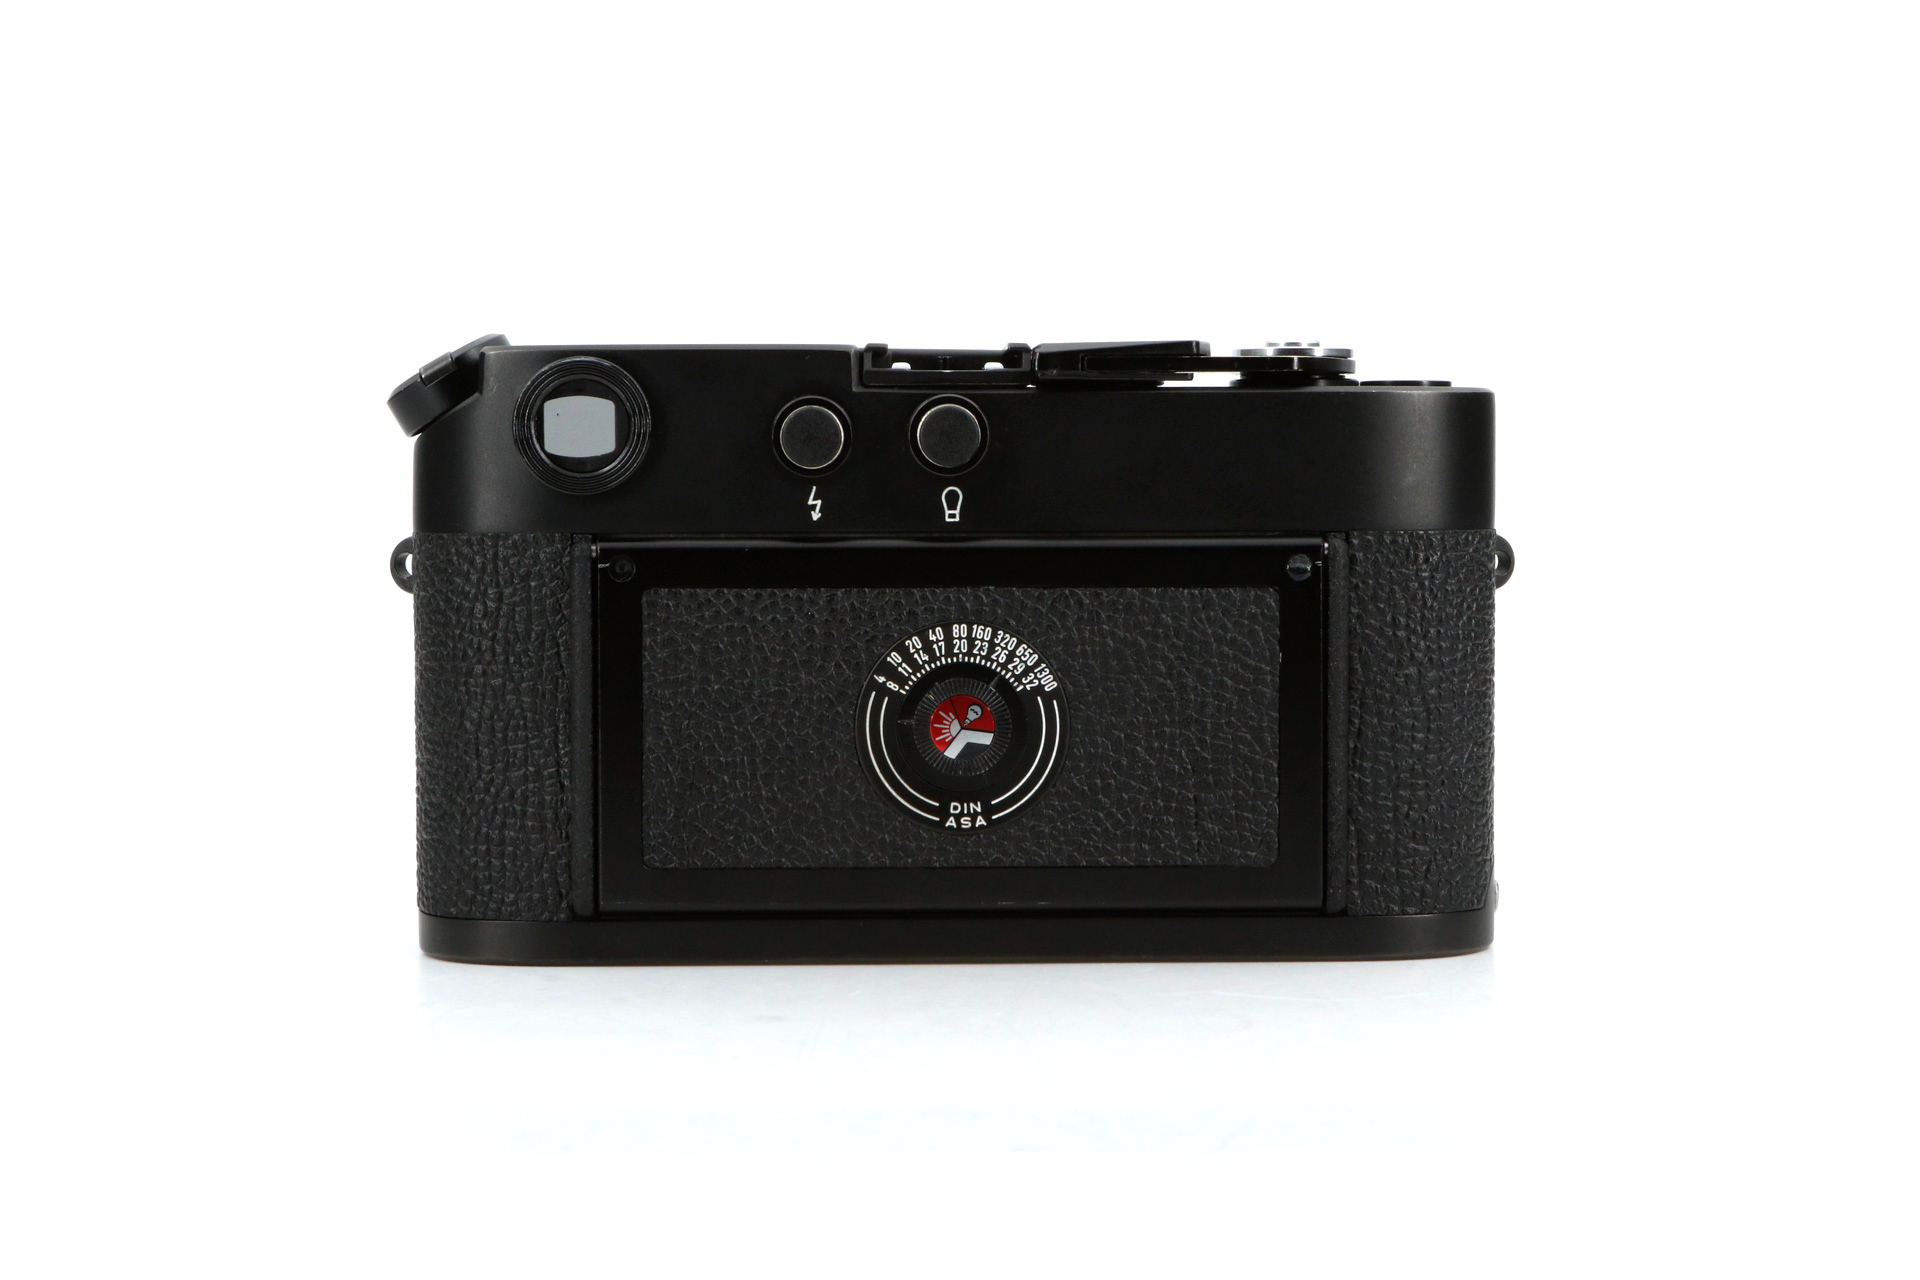 Leica M4 black chrome plated